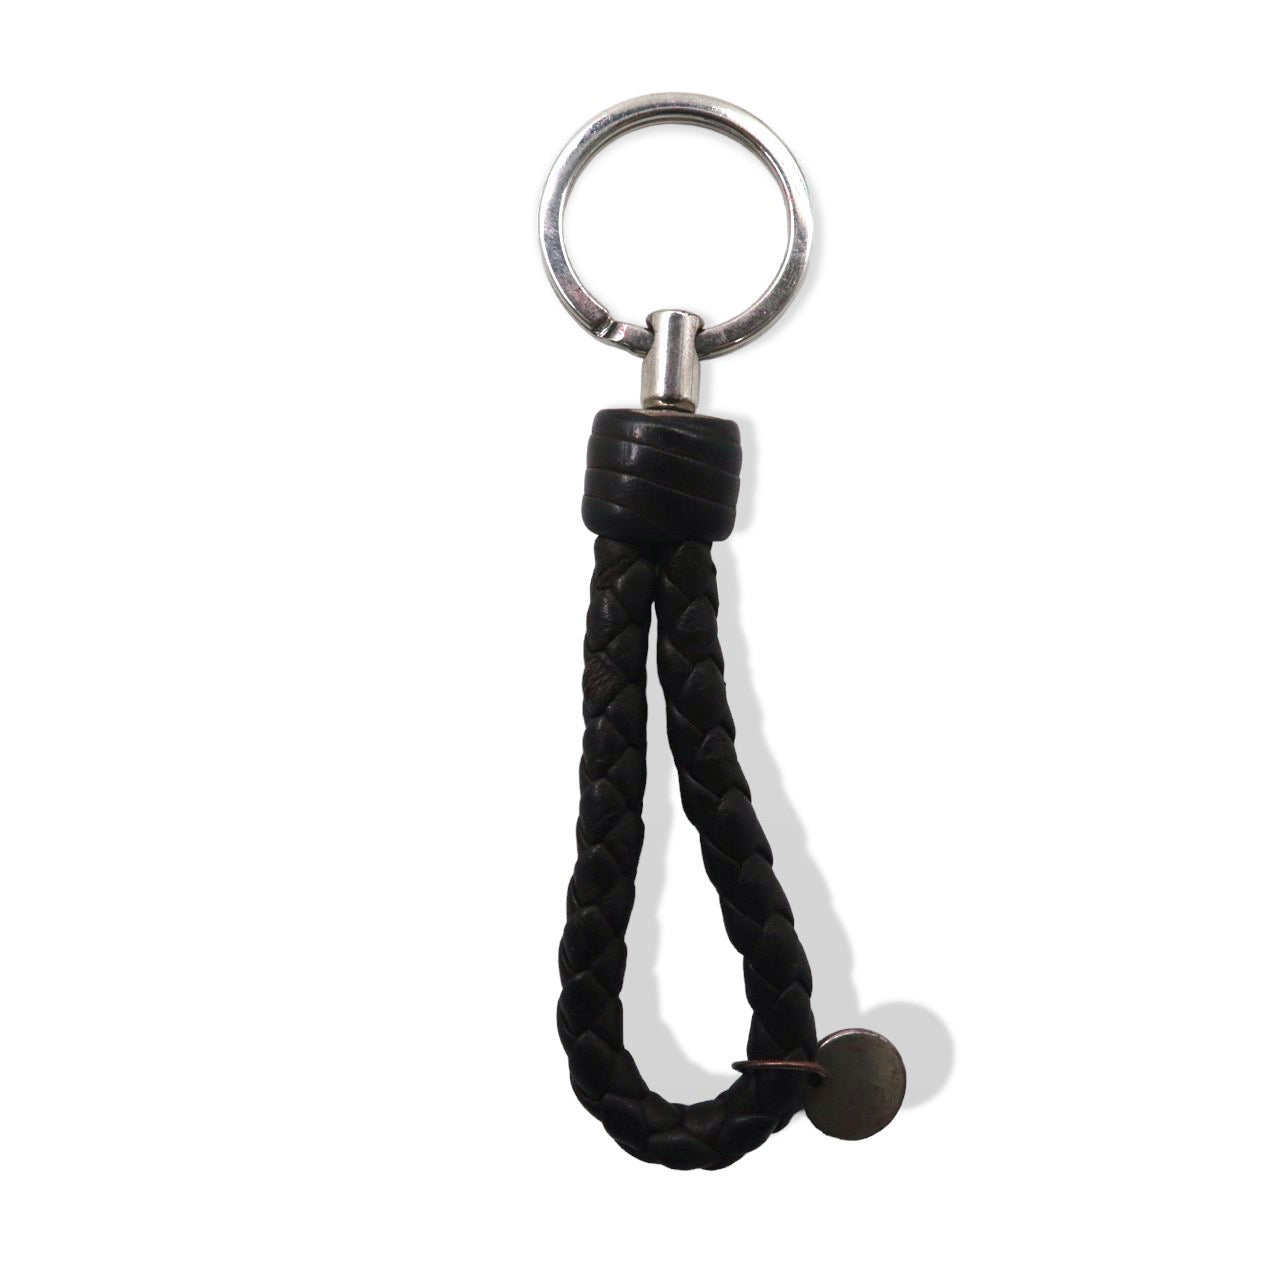 BOTTEGA VENETA Intrecchart charm key chain brown leather braid 